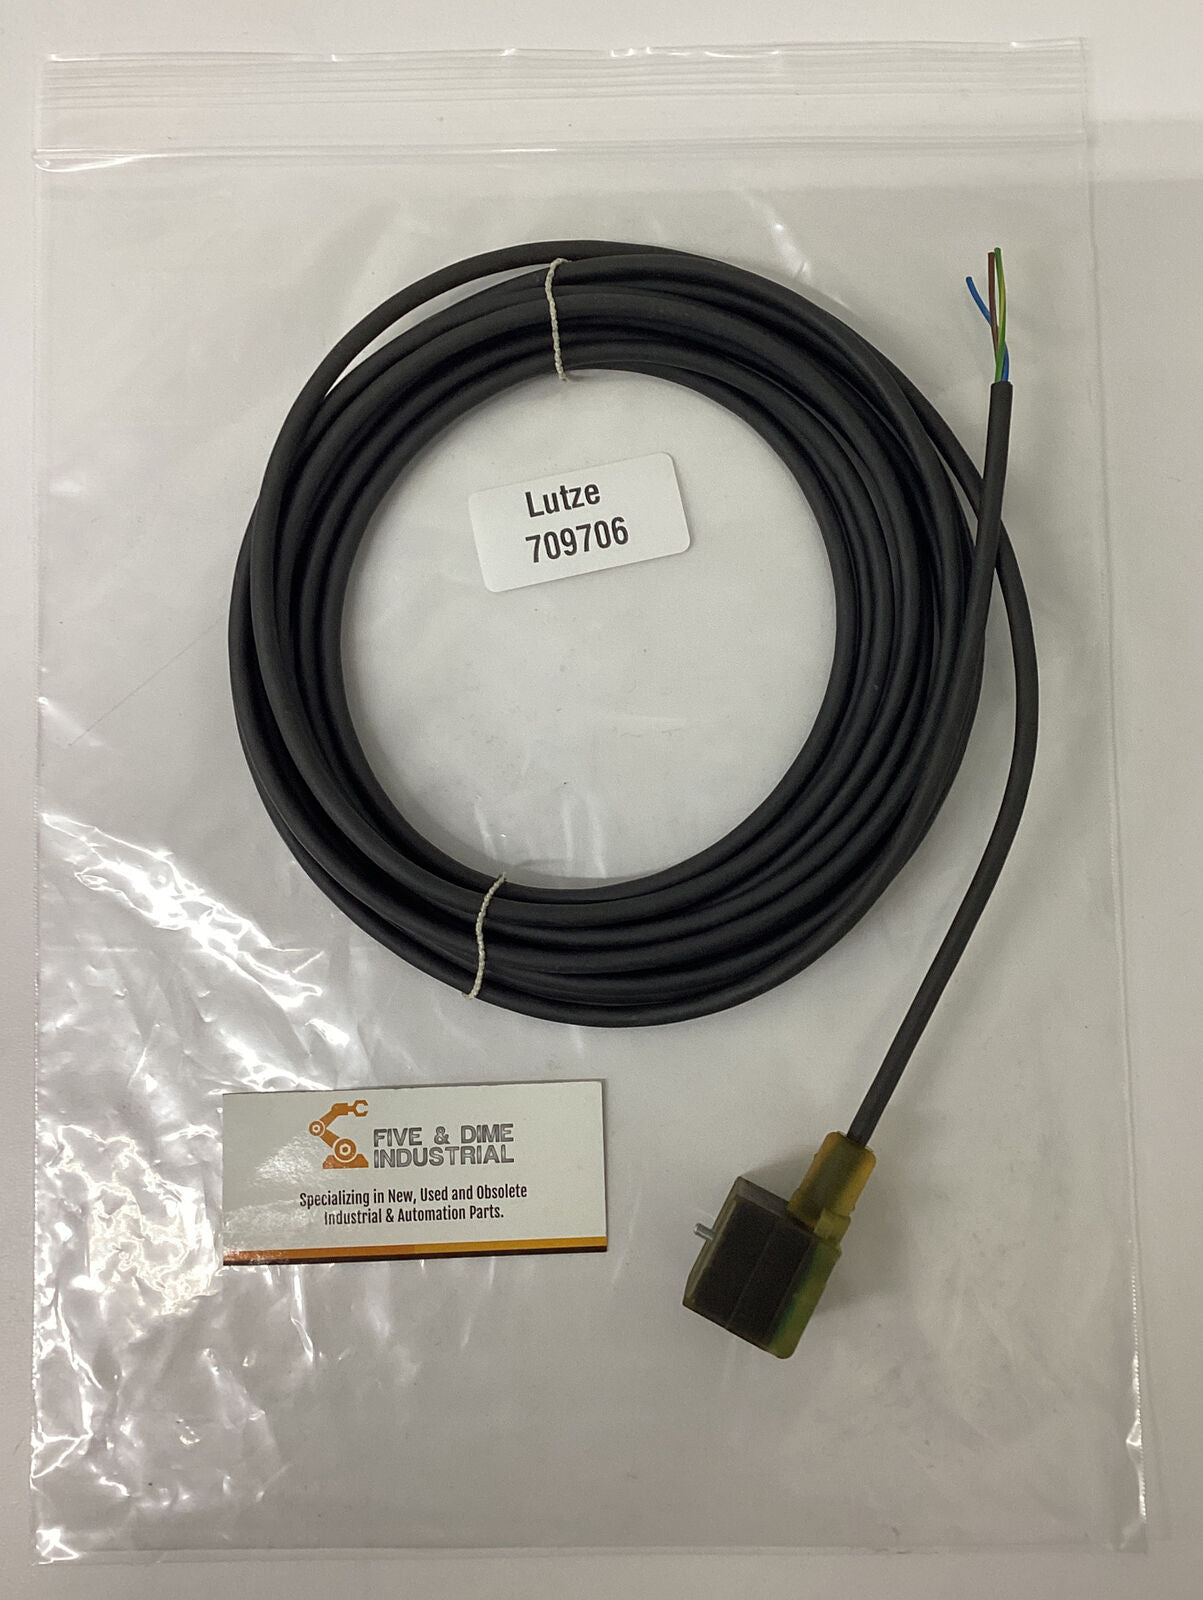 Lutze LS-A-9706 / 70906  24V Suppressor Diode LED 5 Meter Cable (CBL133)